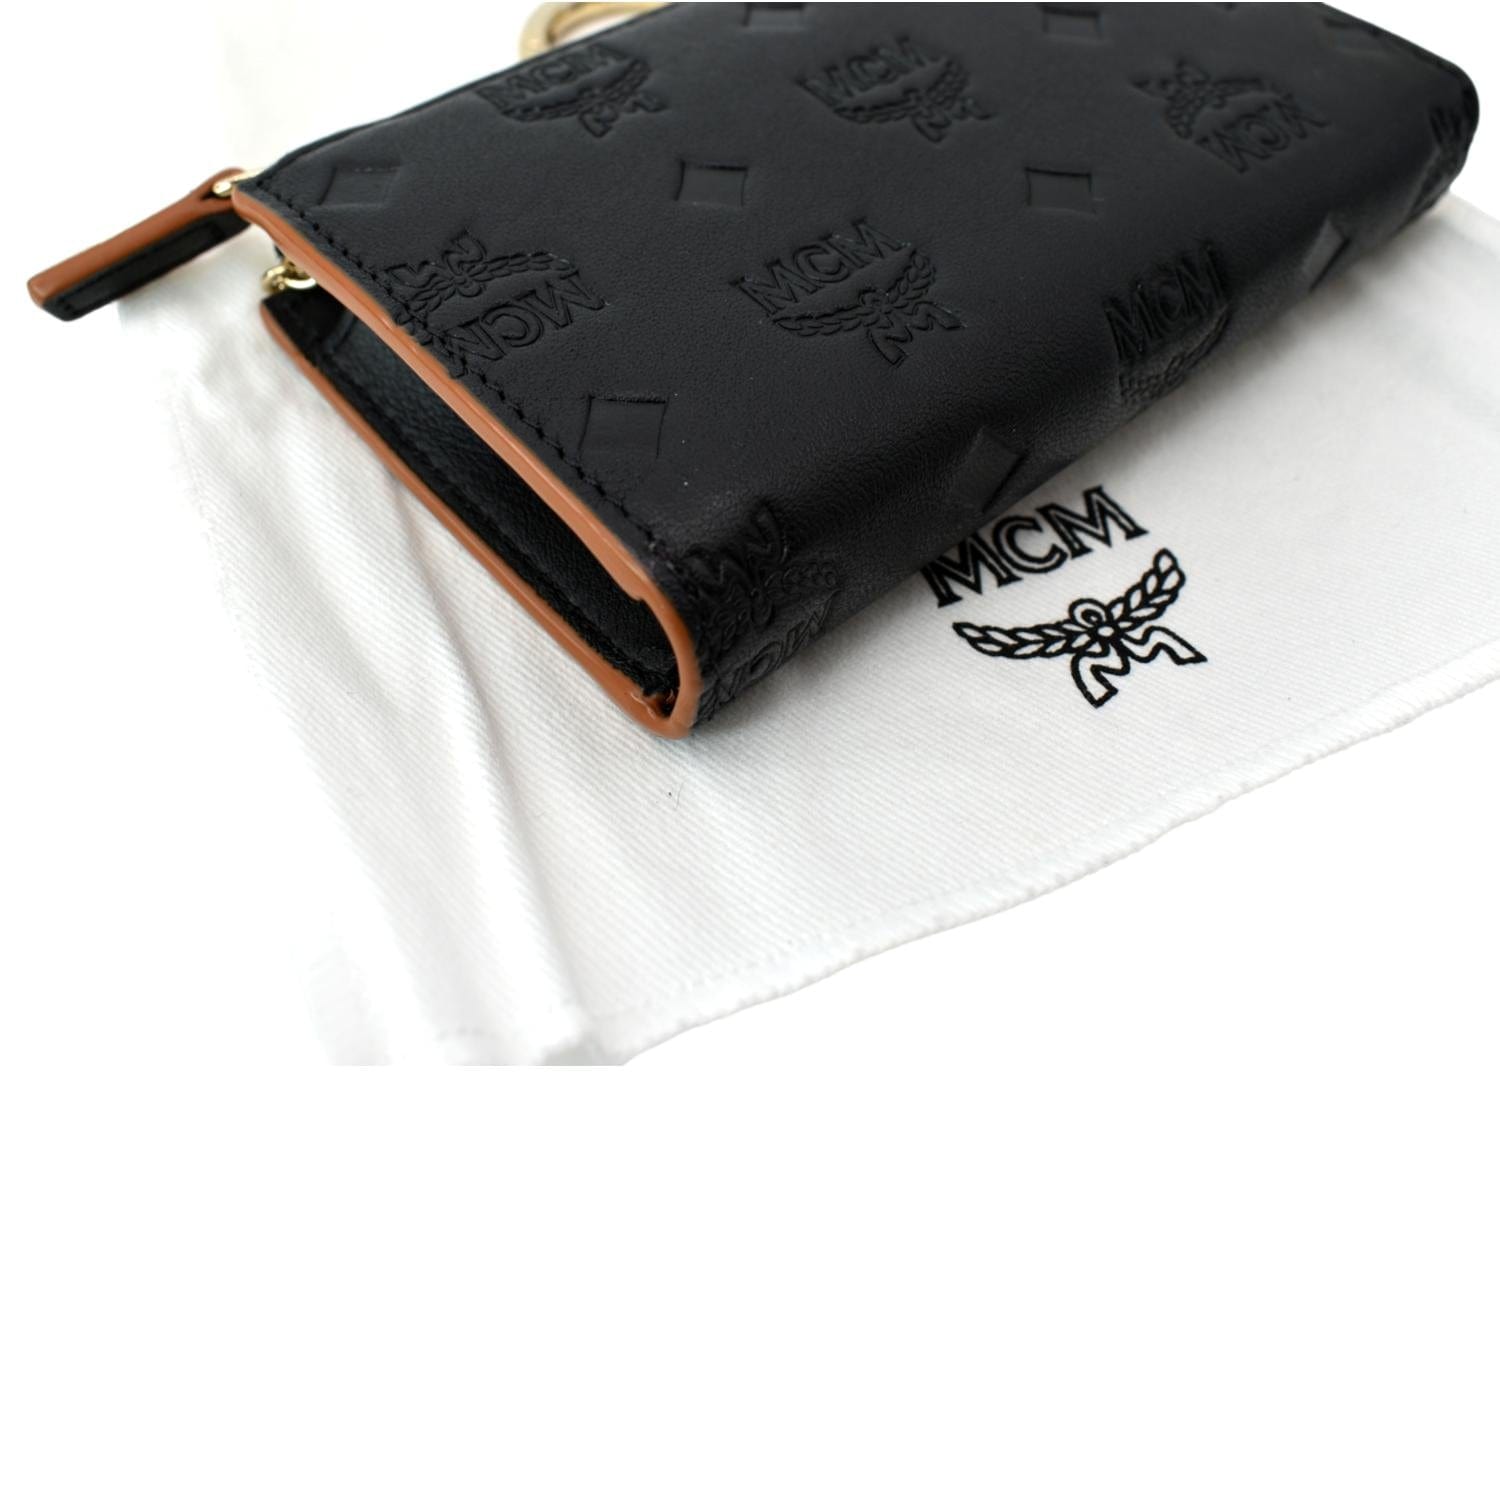 MCM Black Leather Logo Zip Wallet